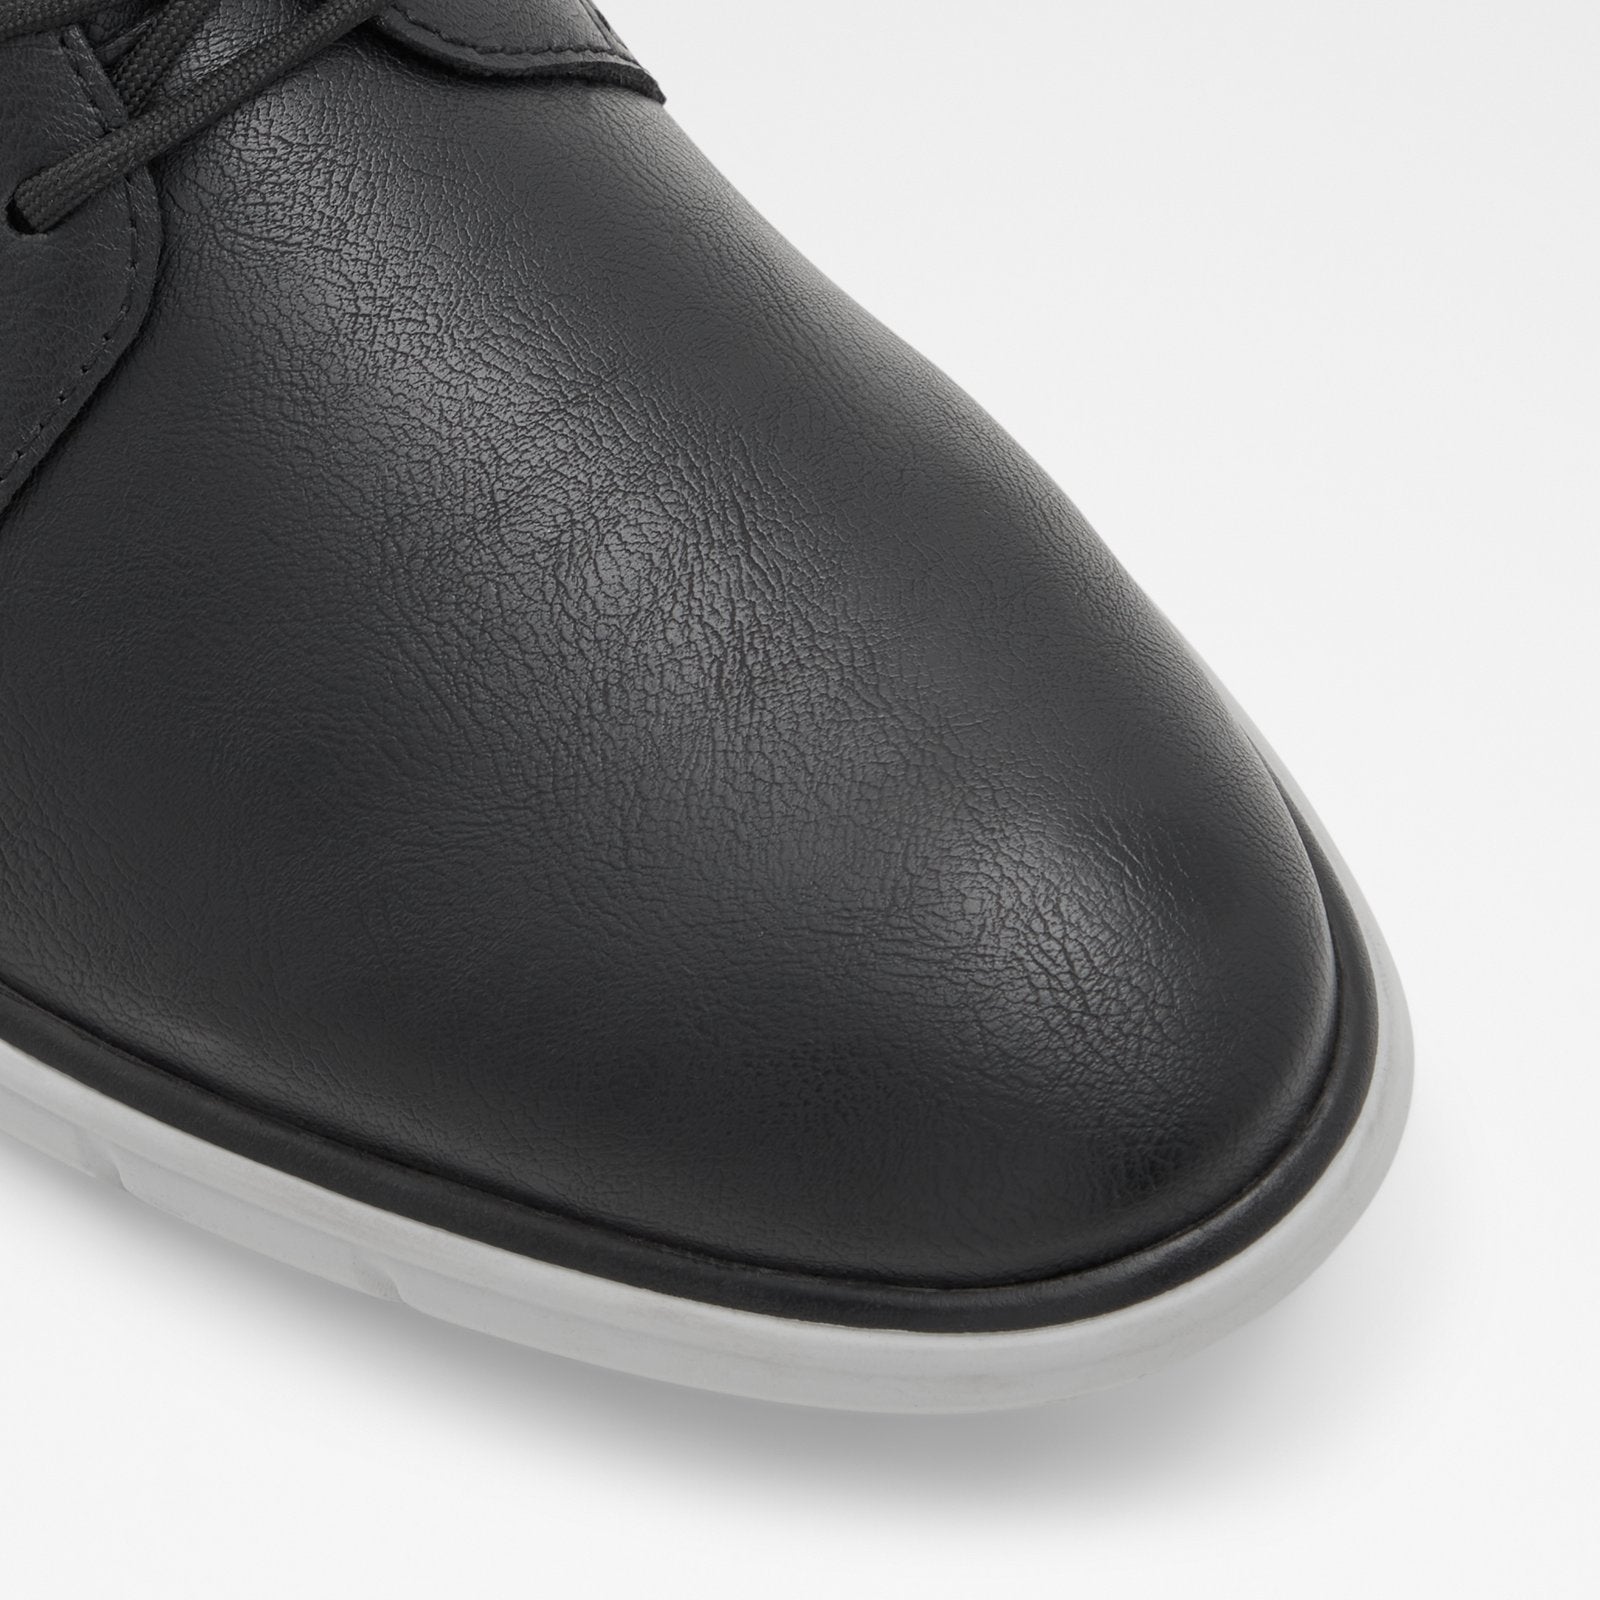 Dividend Men Shoes - Black - ALDO KSA